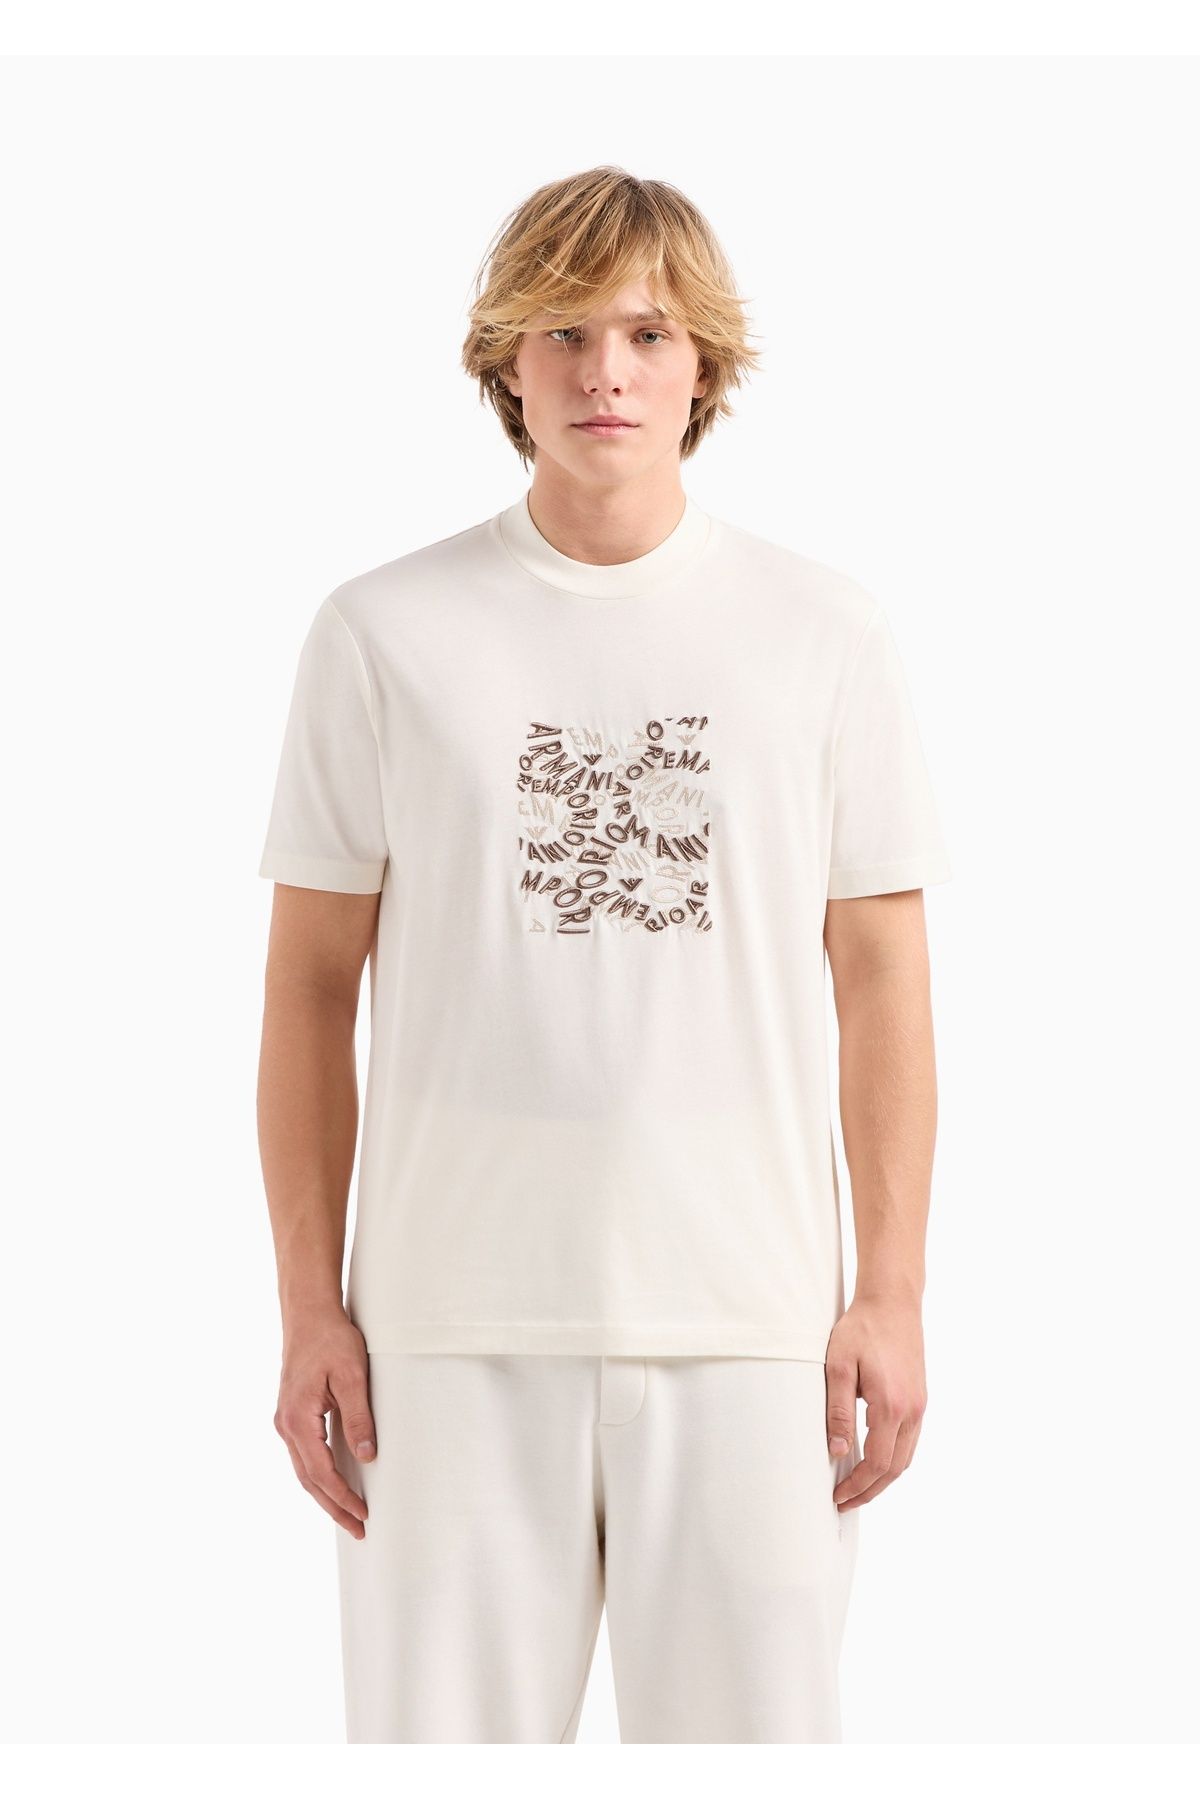 Emporio Armani Erkek Pamuklu Kısa Boy Rahat Kesim Günlük Ekru T-Shirt 3D1TG3 1JPZZ-01A2